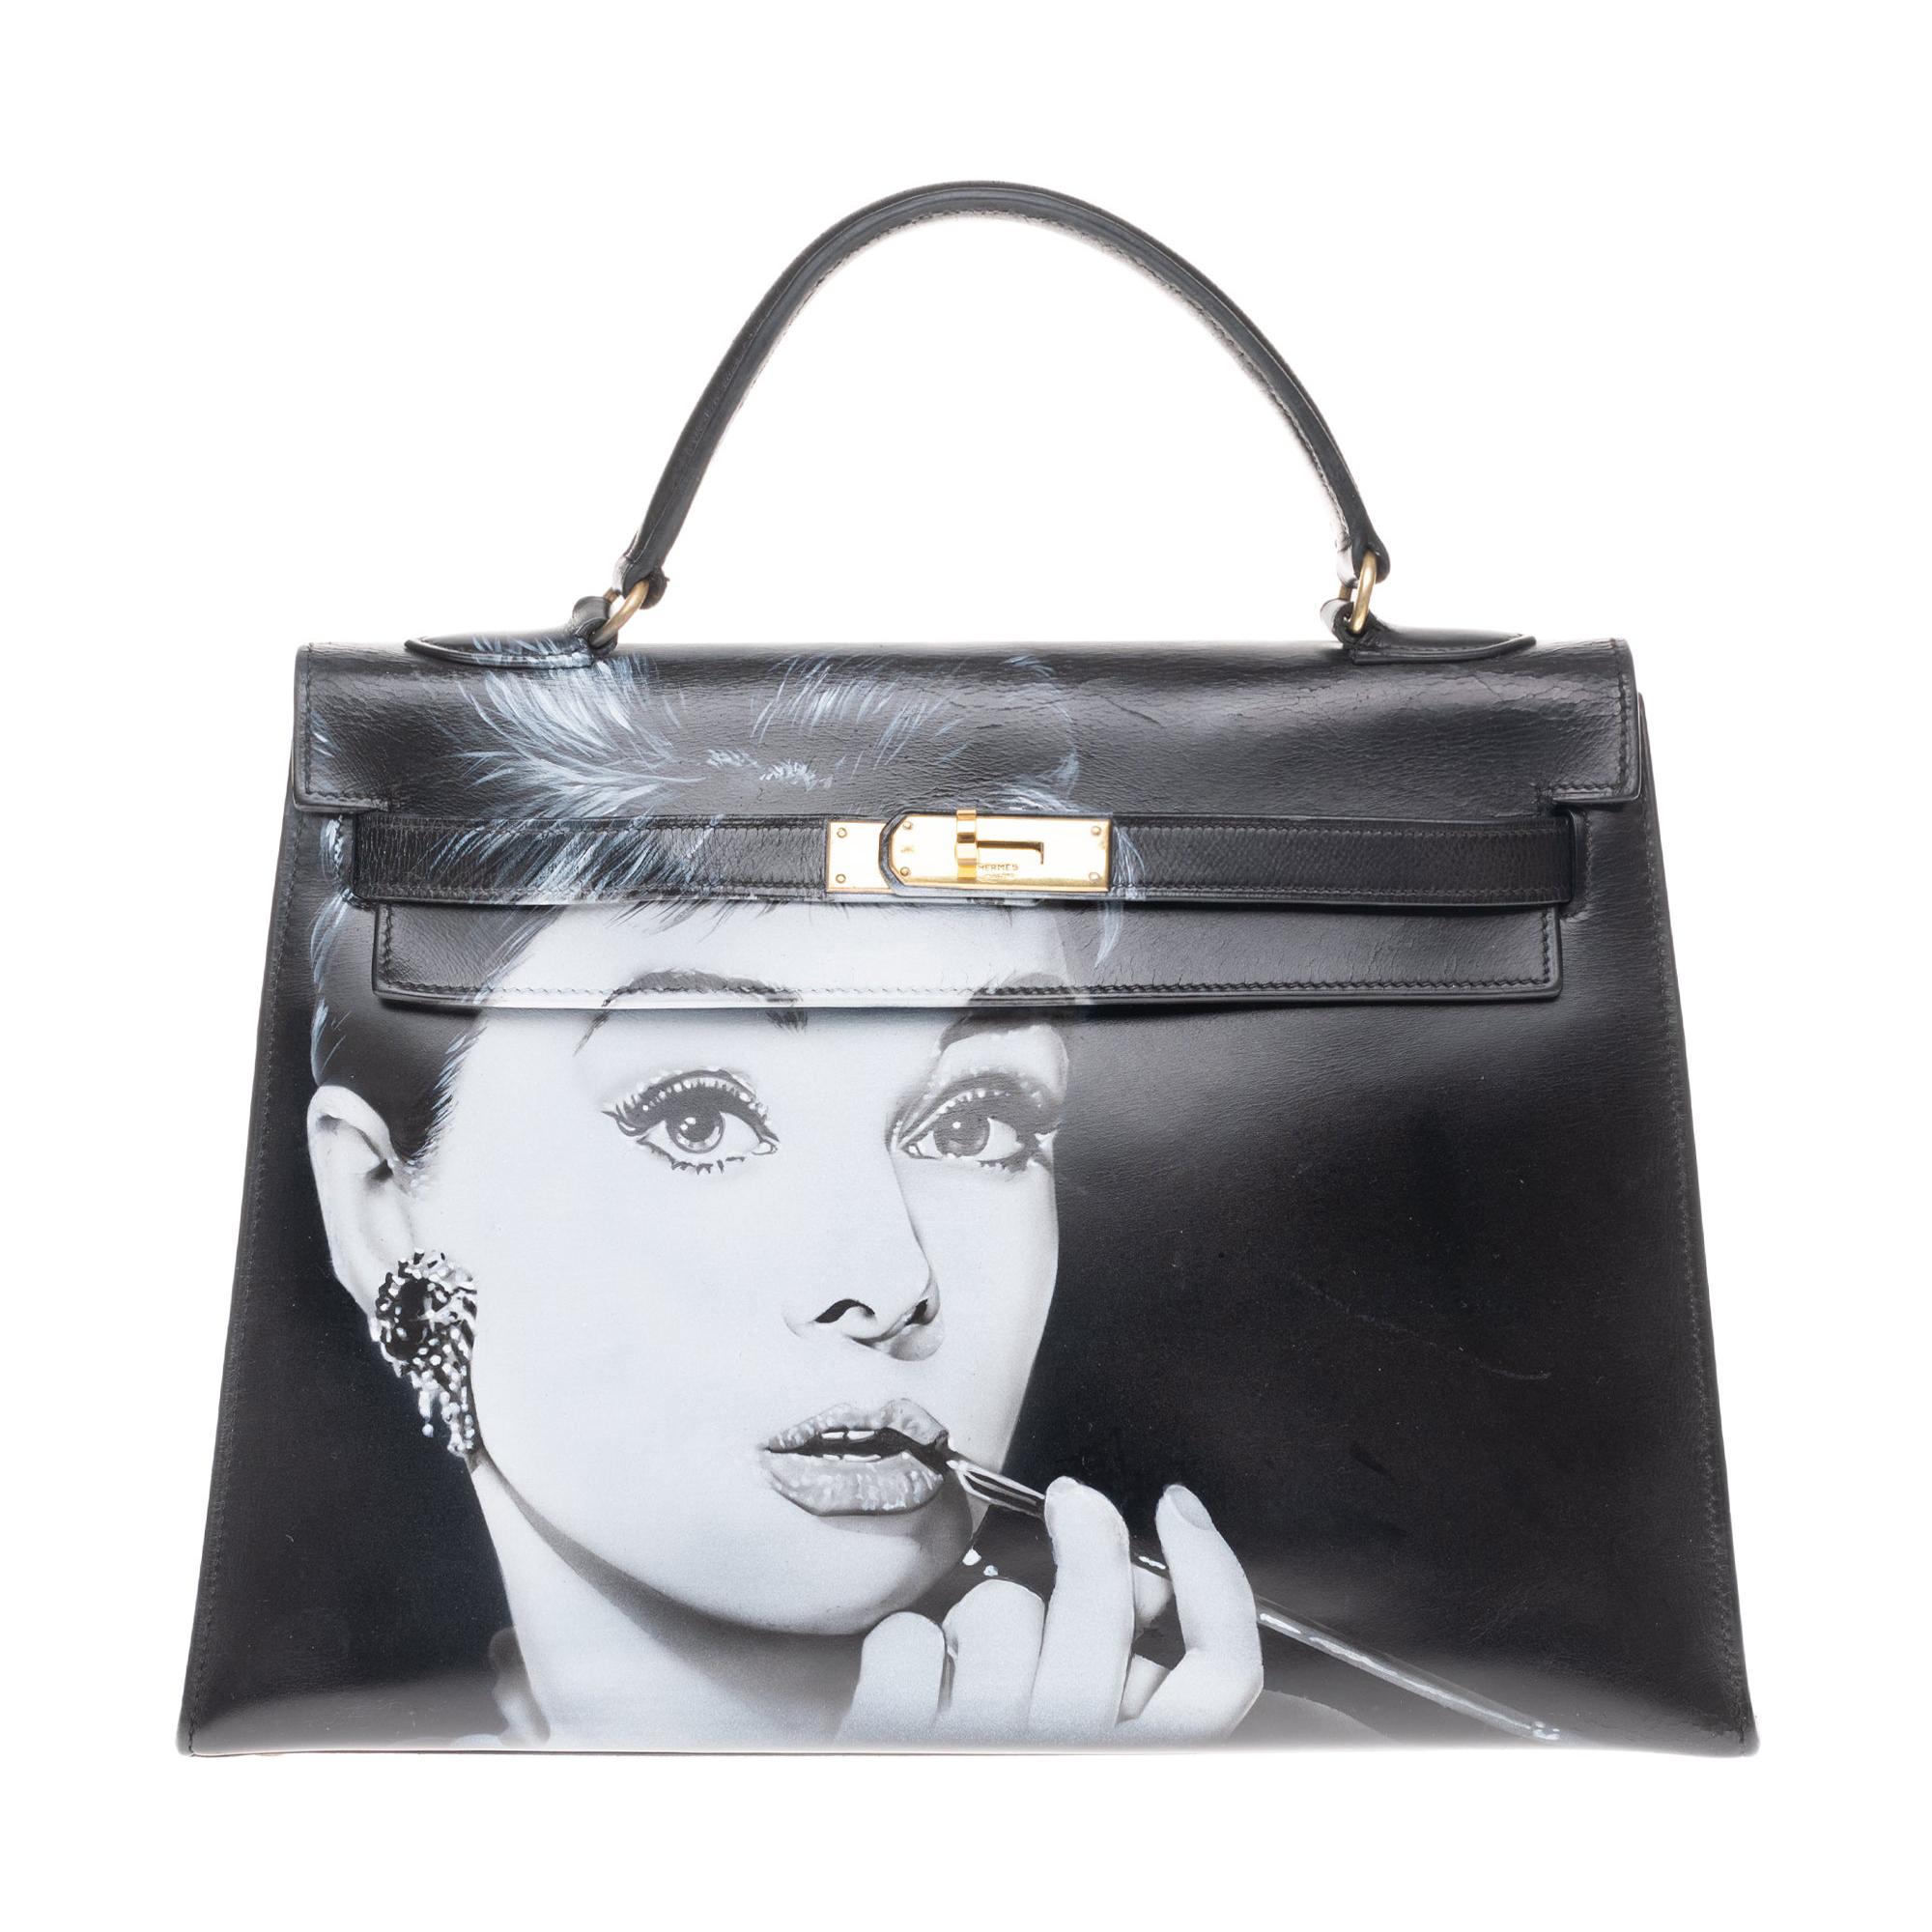 Amazing creation "Audrey Hepburn" on Kelly 32 cm handbag in black calfskin